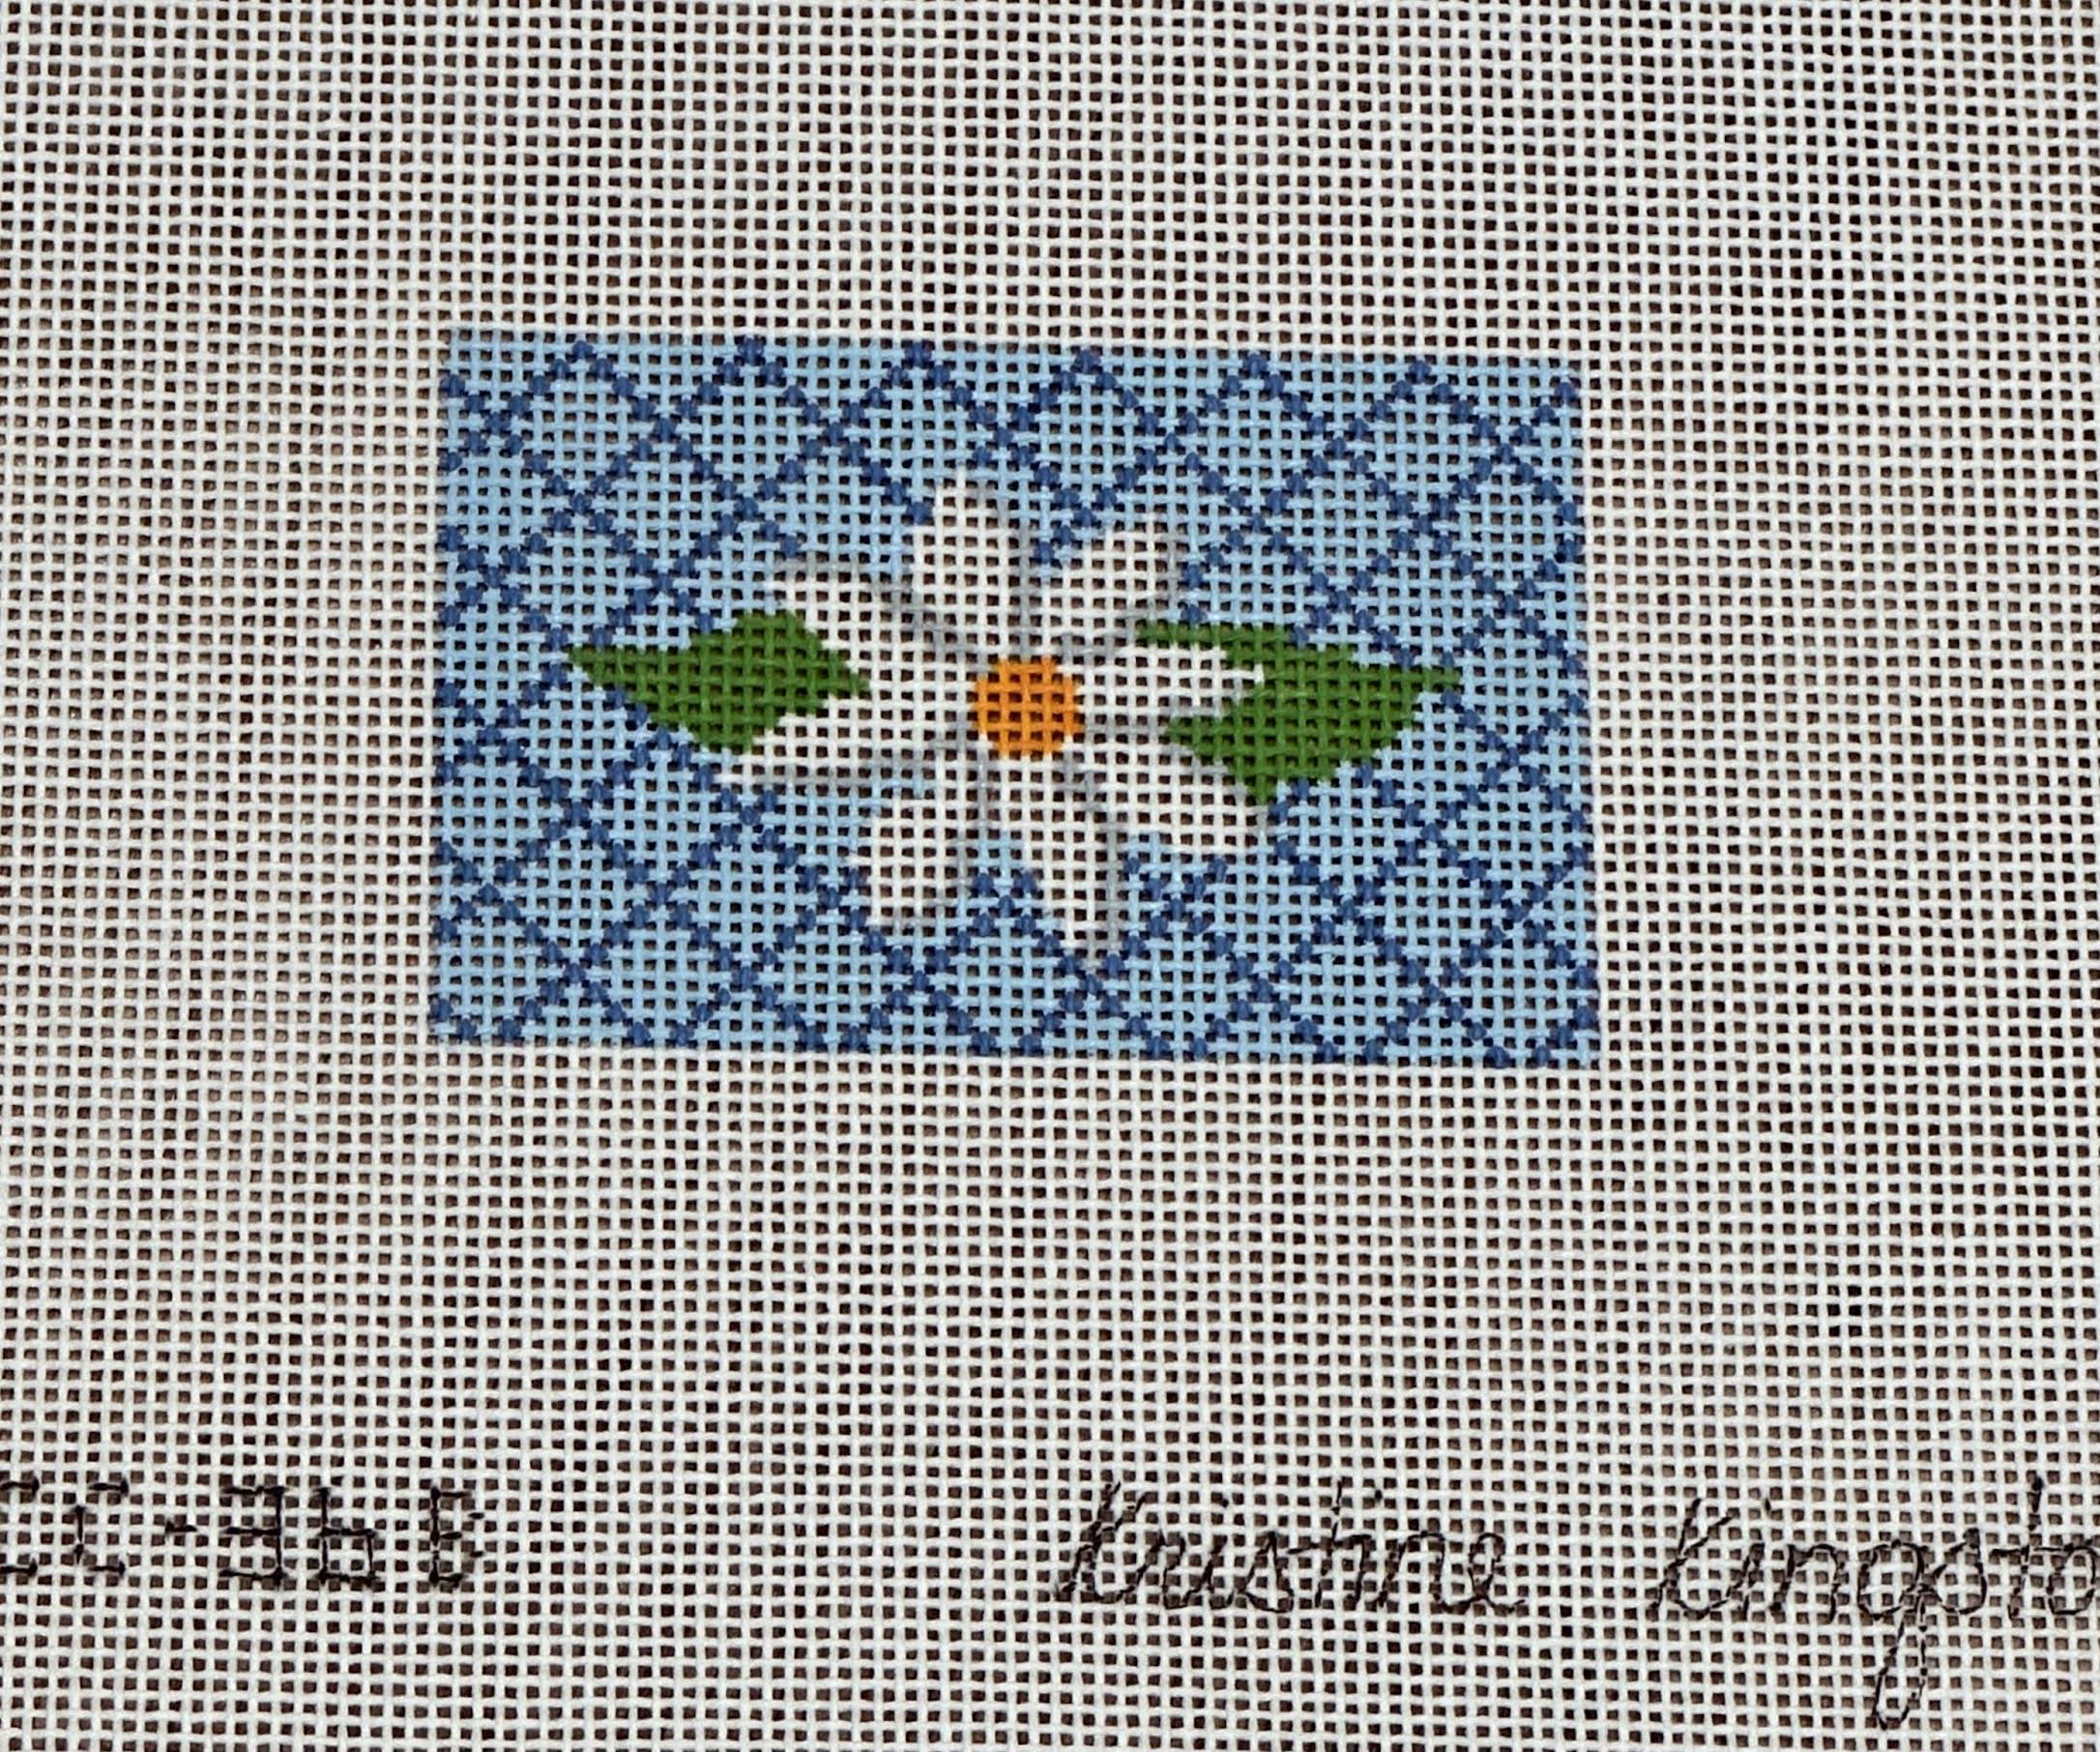 Kristine Kingston WCC-36B White flower on turquoise lattice background